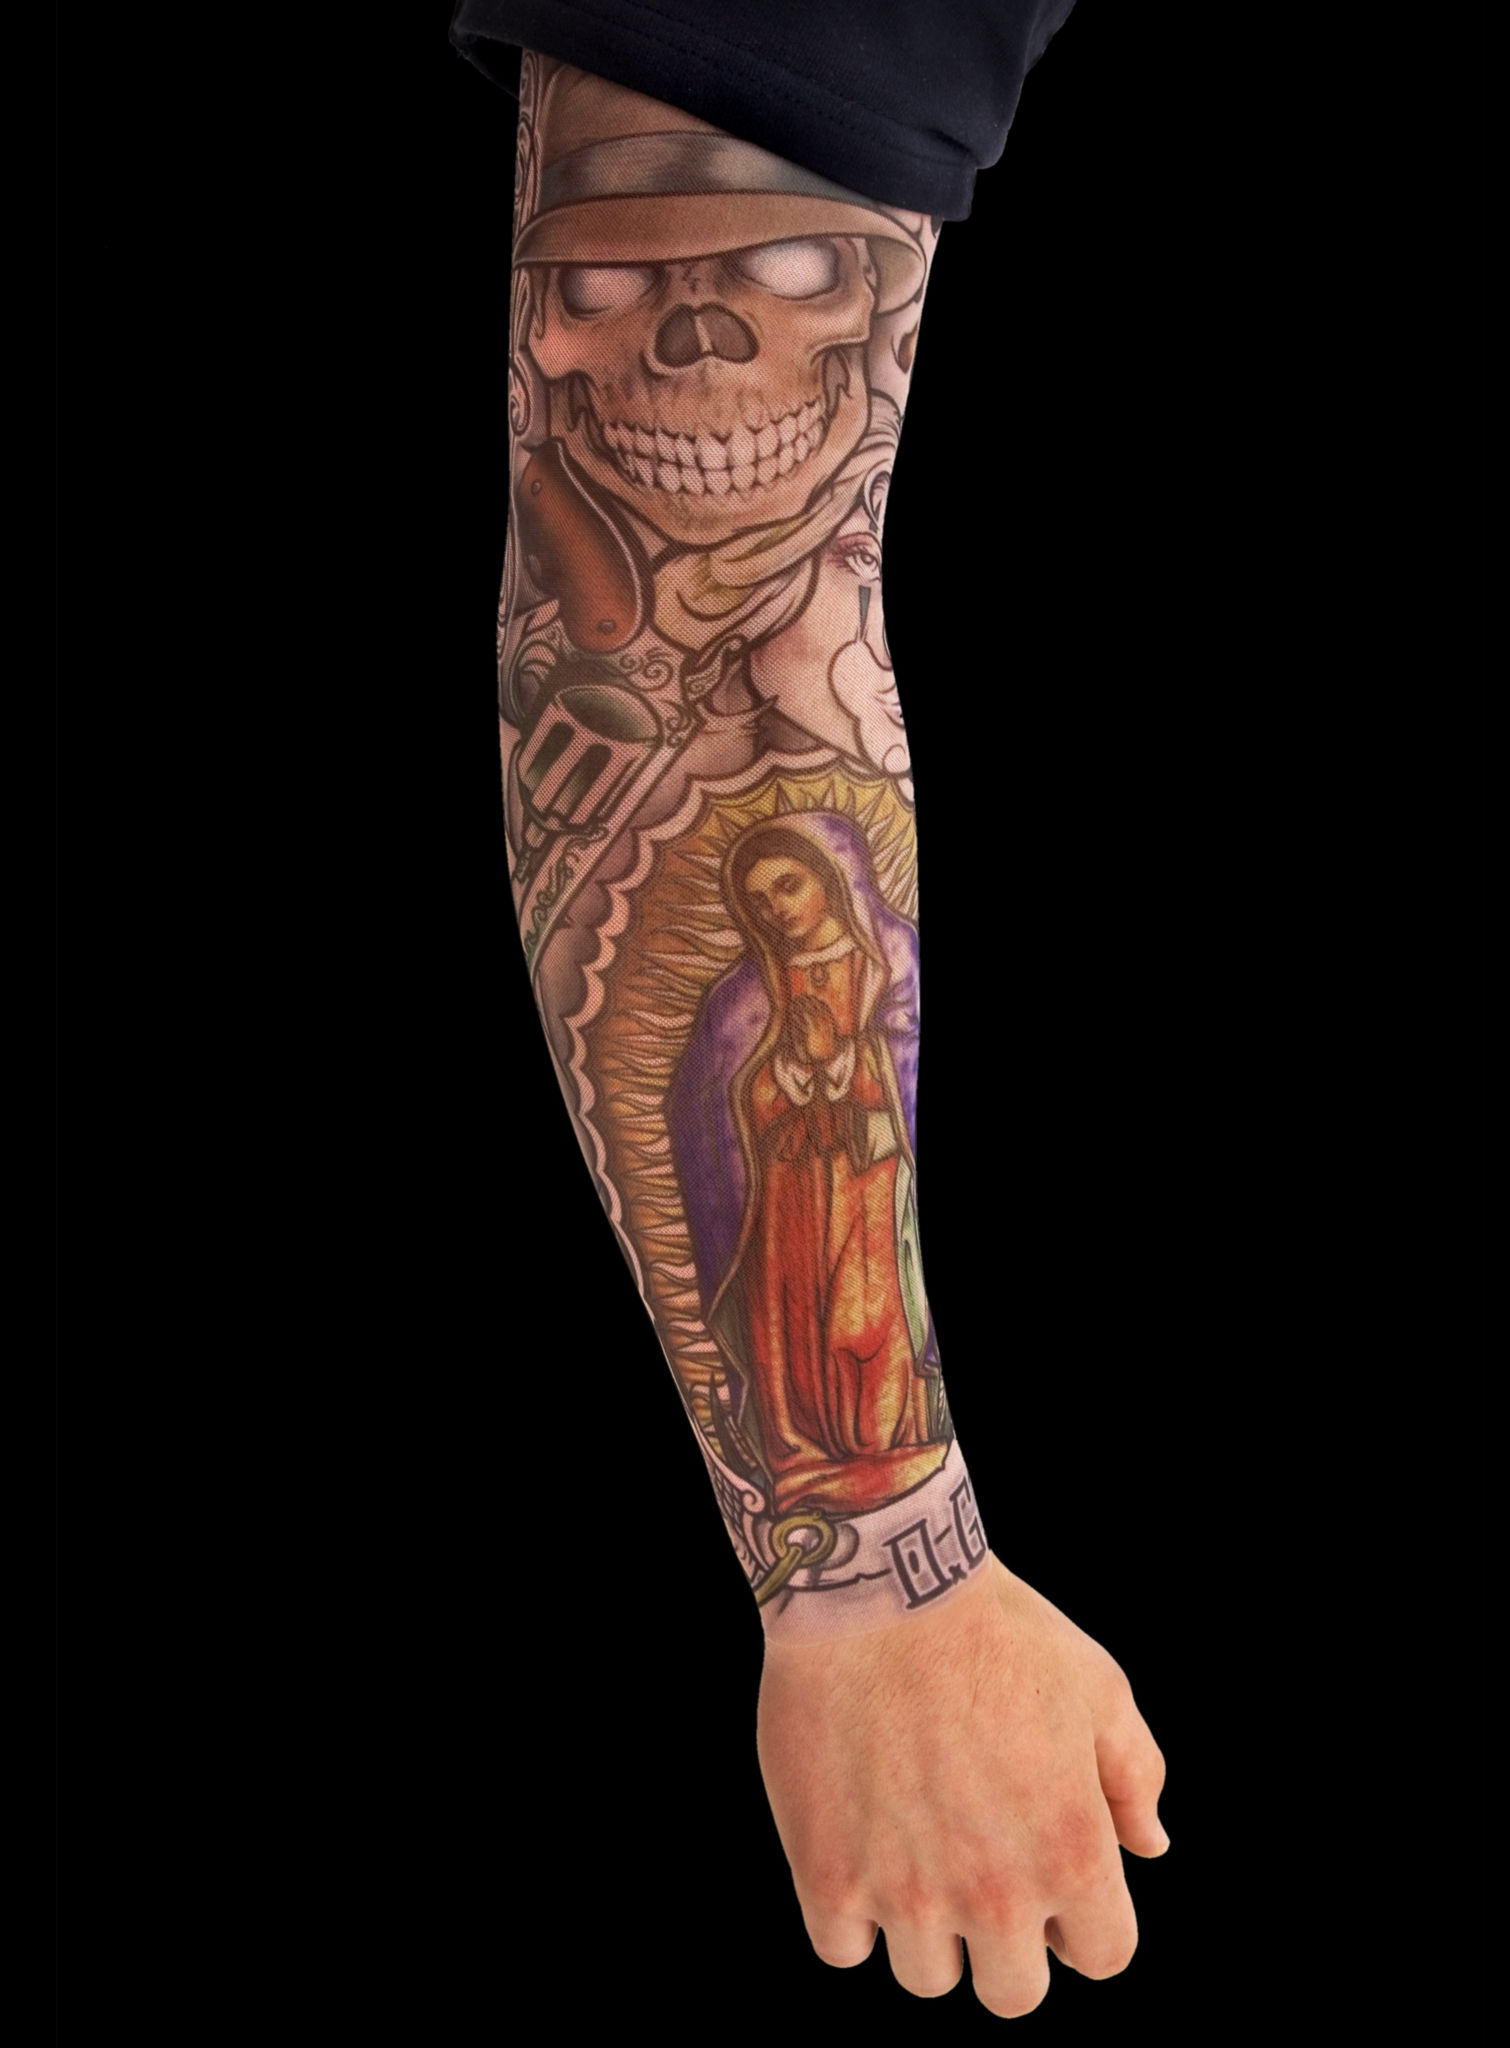 102815-gangsta-tattoo-sleeves-aermel-skins